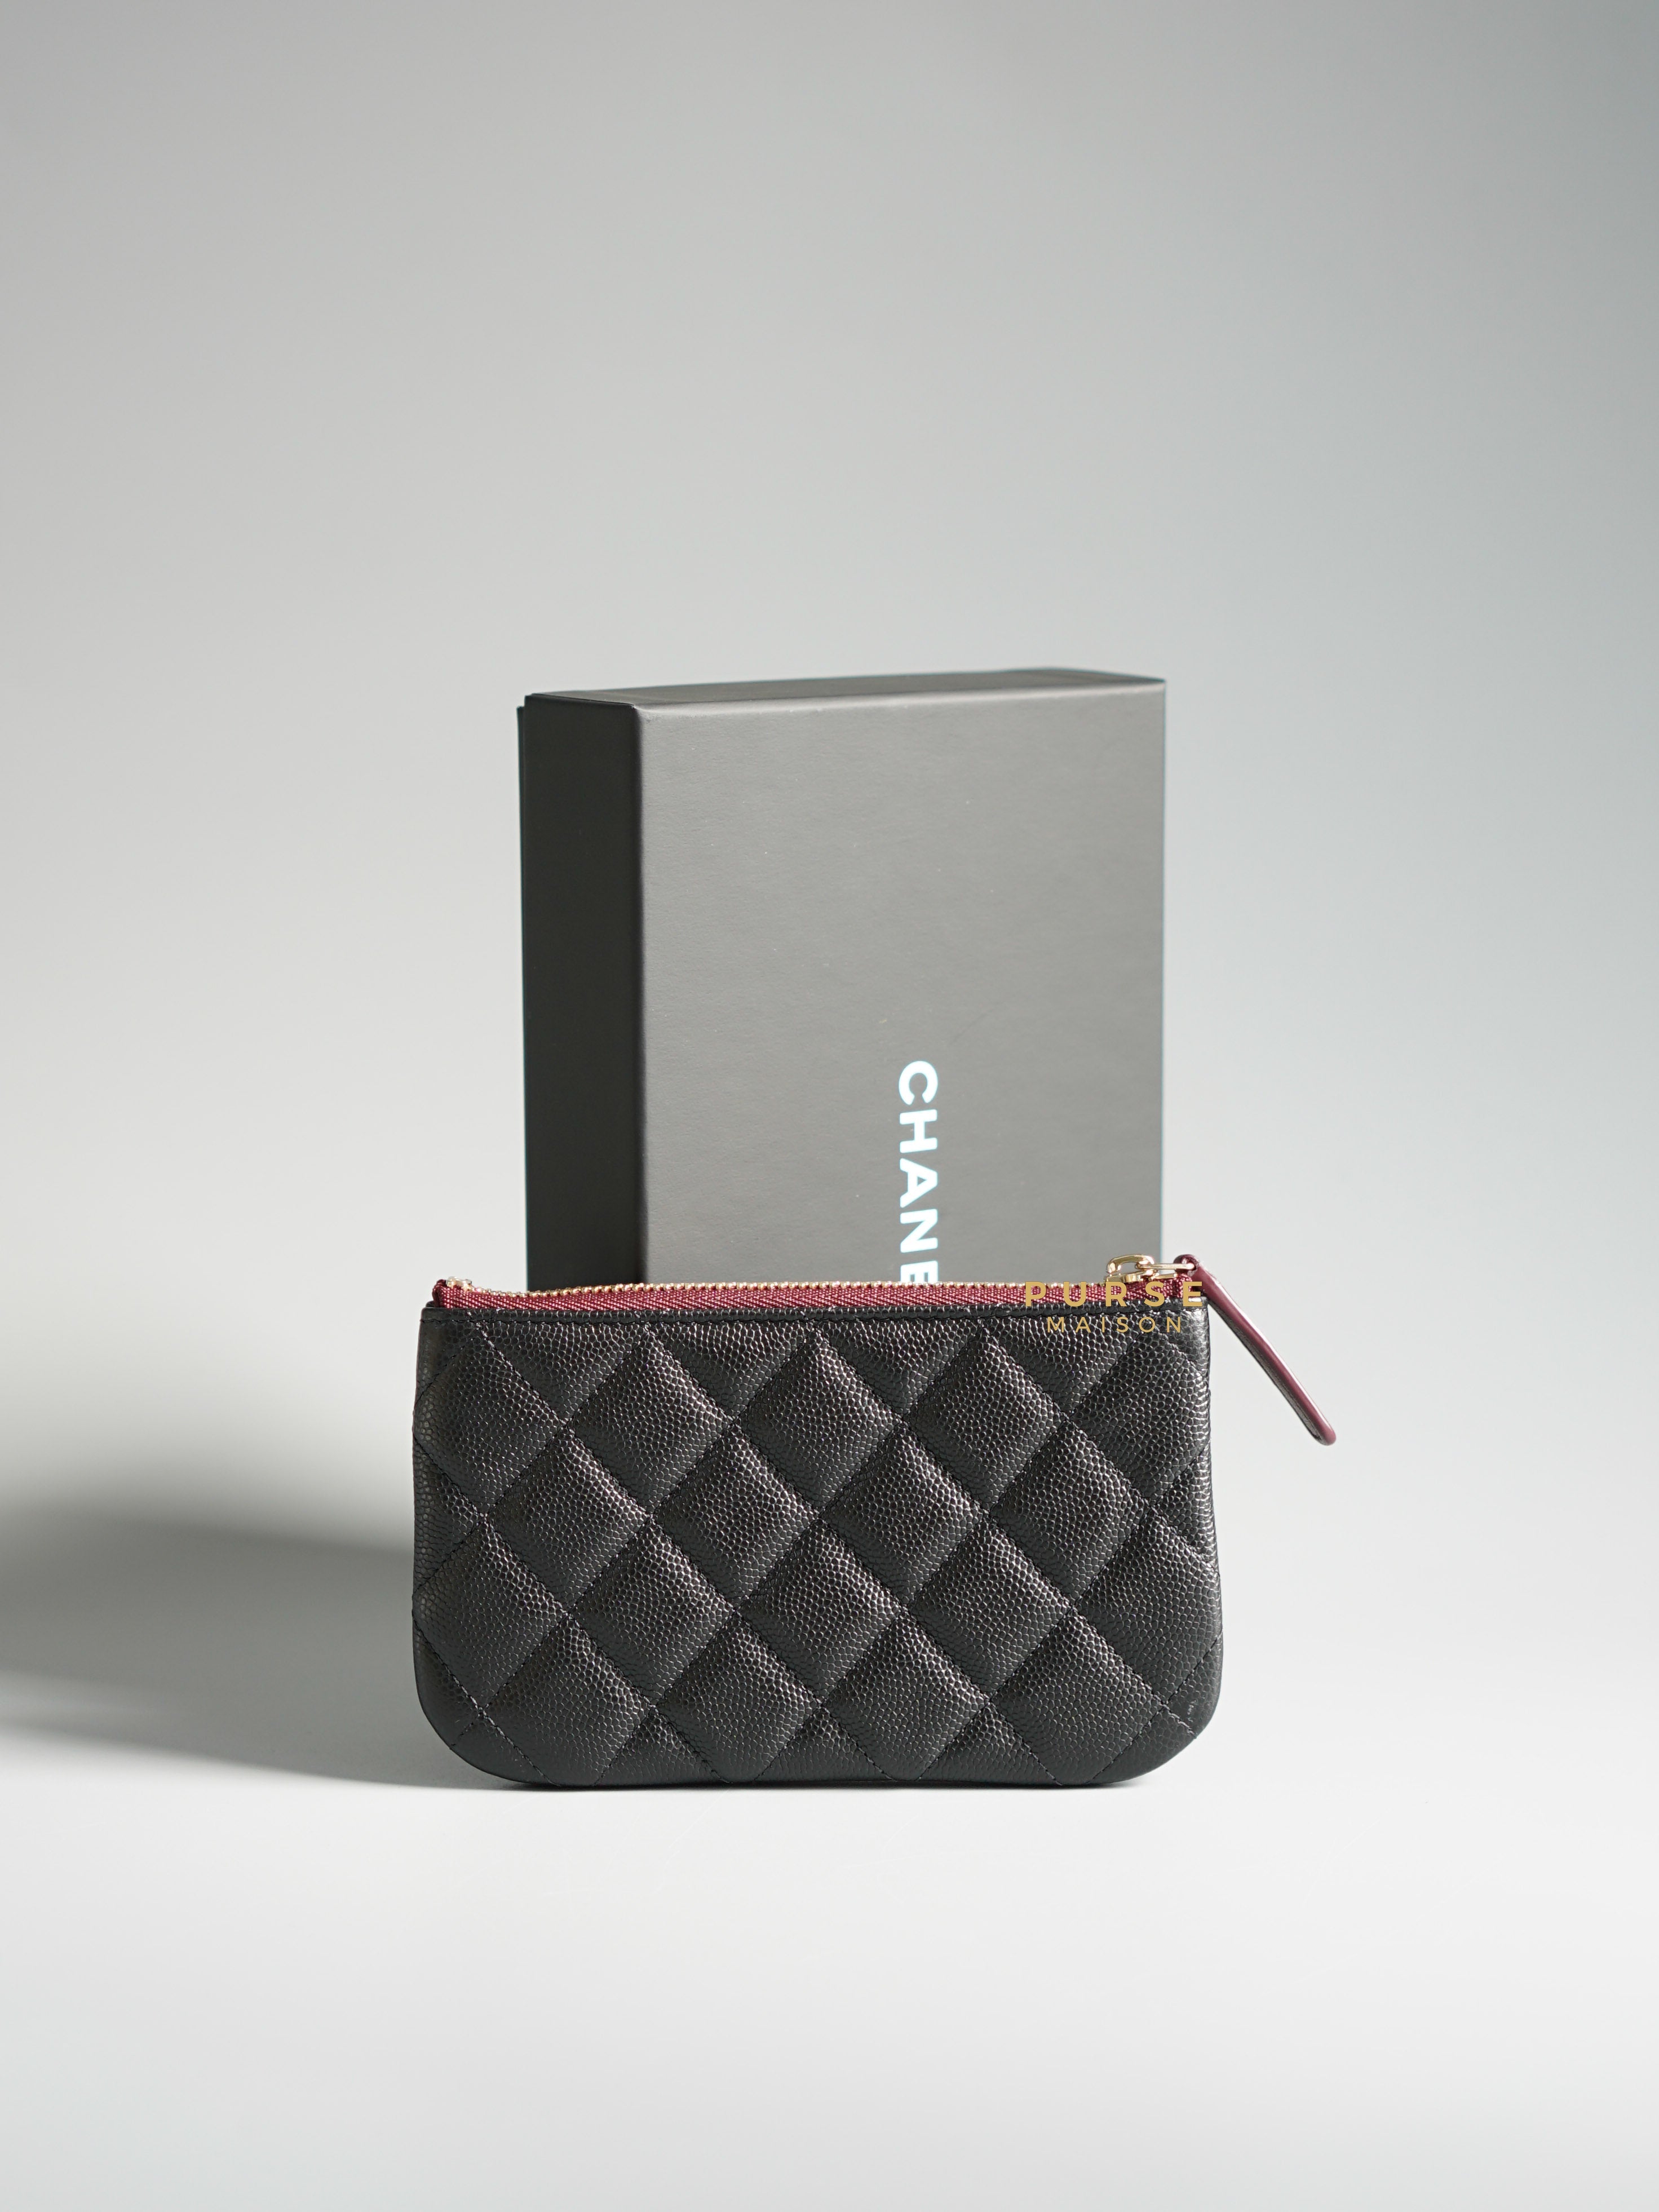 Chanel Mini O Case Pouch Caviar Leather Gold Hardware (Microchip) | Purse Maison Luxury Bags Shop